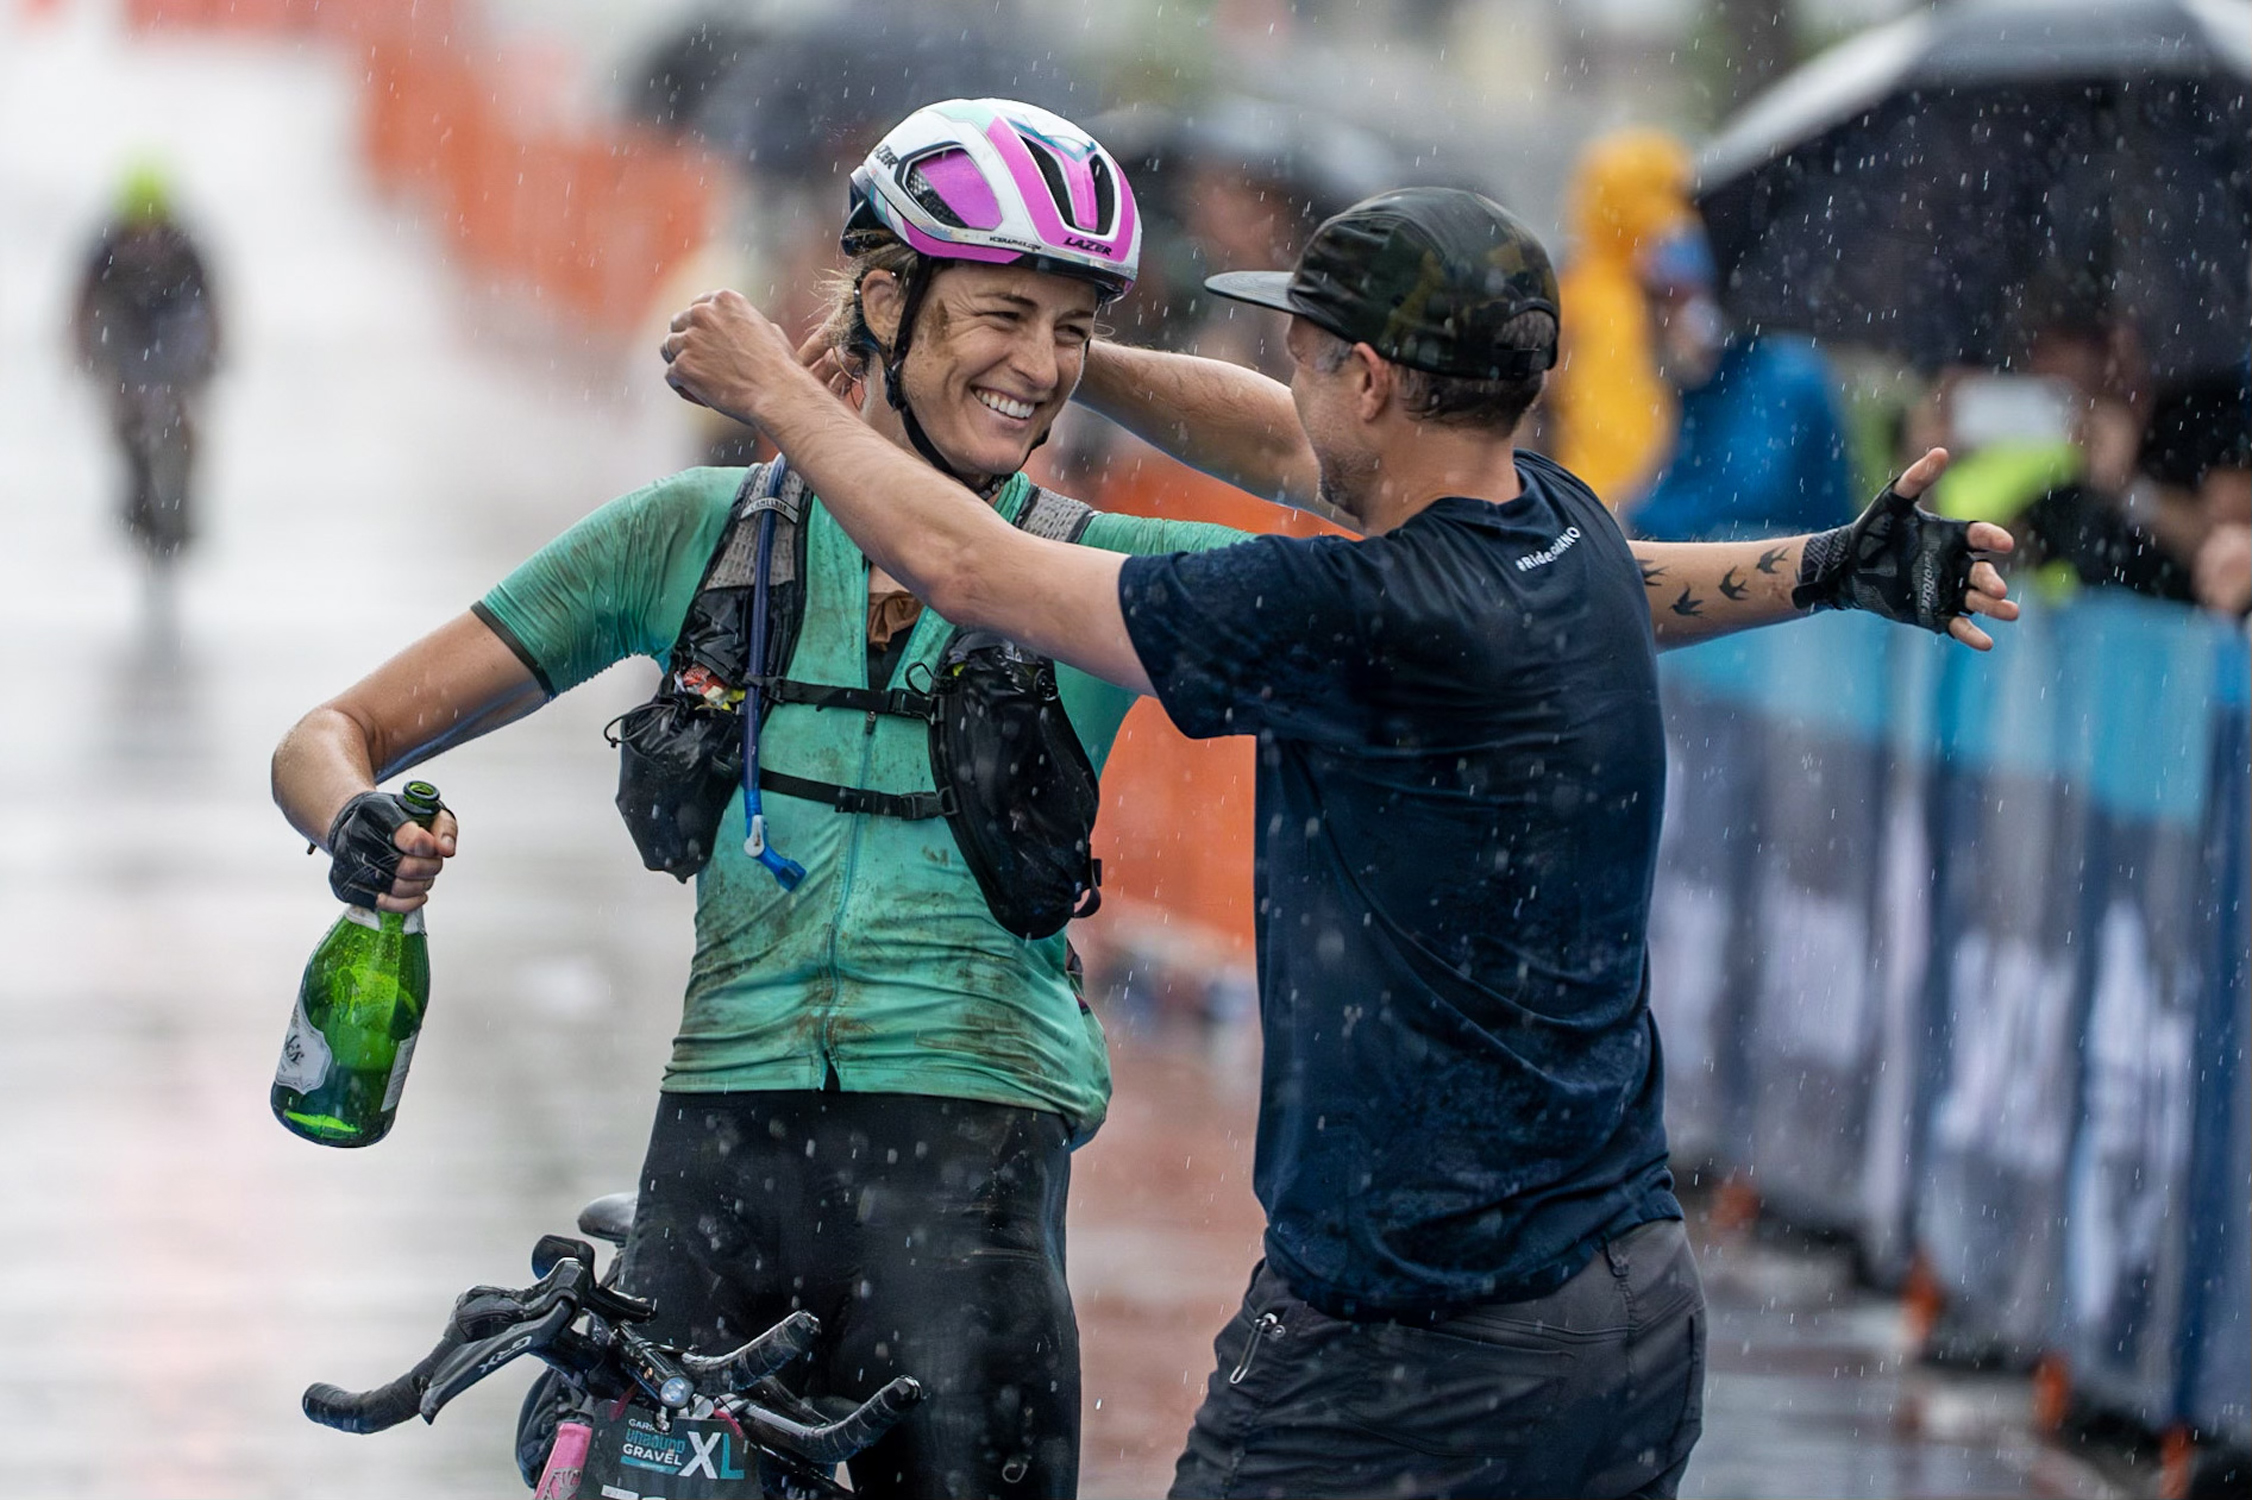 Kristen Legan and Nick Legan hugging after Kristen wins Unbound XL gravel race in the rain